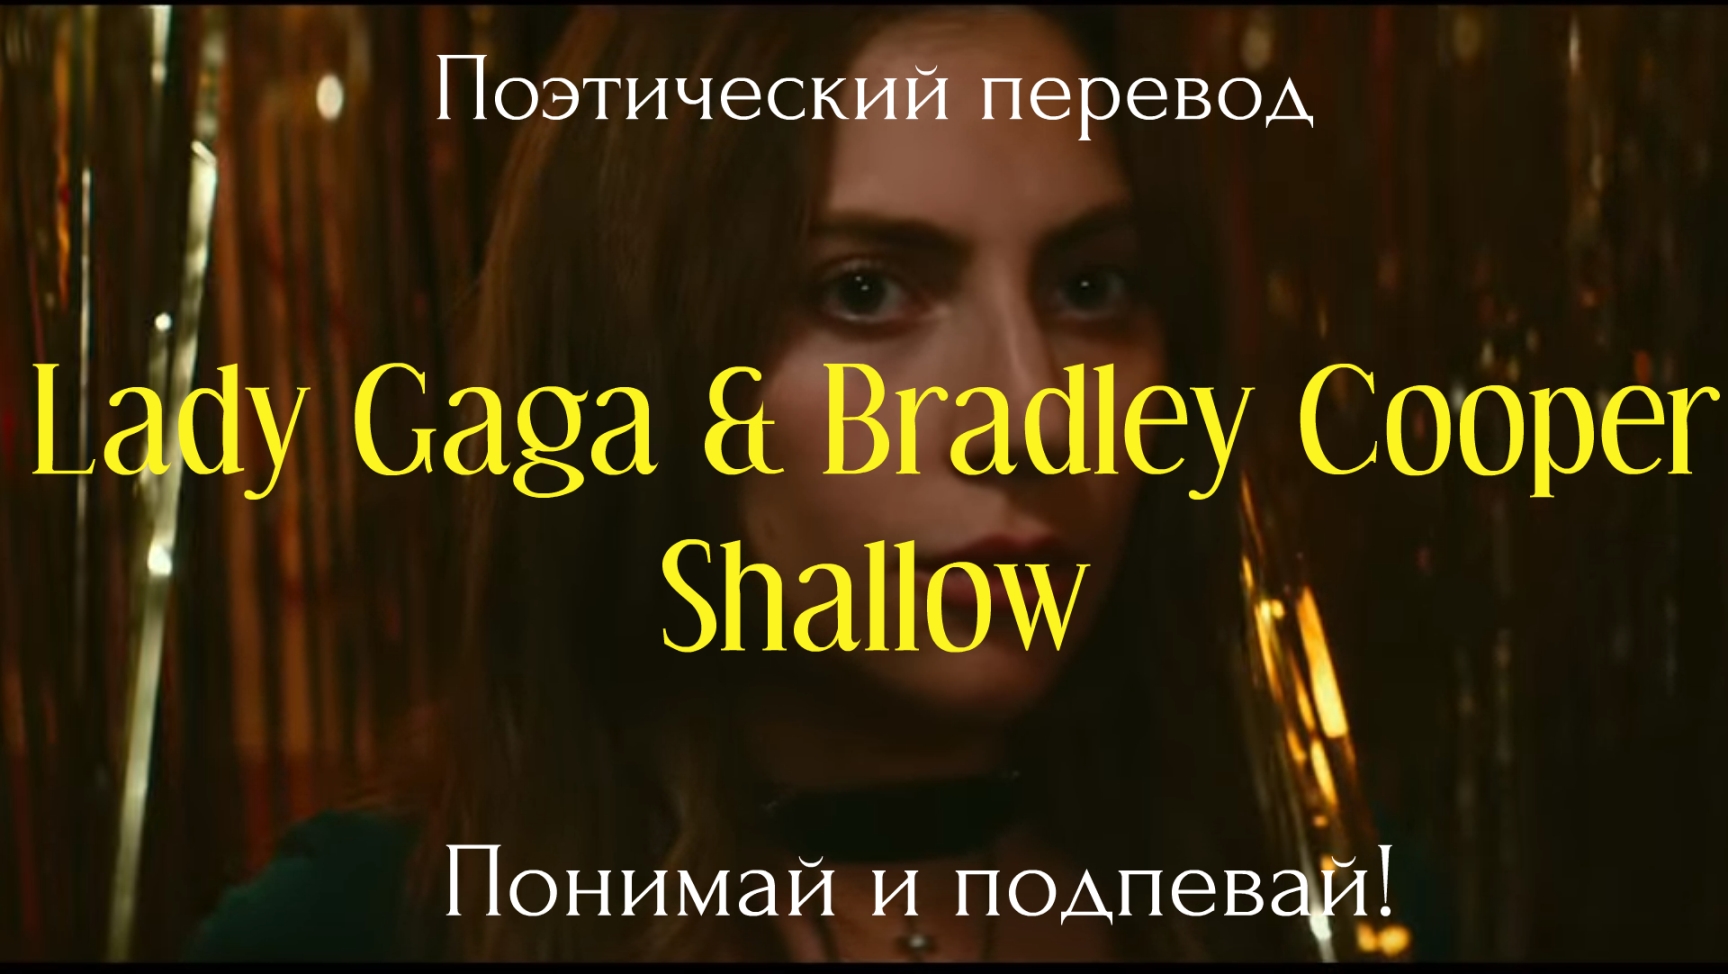 Lady Gaga, Bradley Cooper shallow перевод. Слова леди Гага и Брэдли Купер. Леди Гага и Брэдли Купер песня текст. Shallow перевод. Песня леди гага перевод на русский